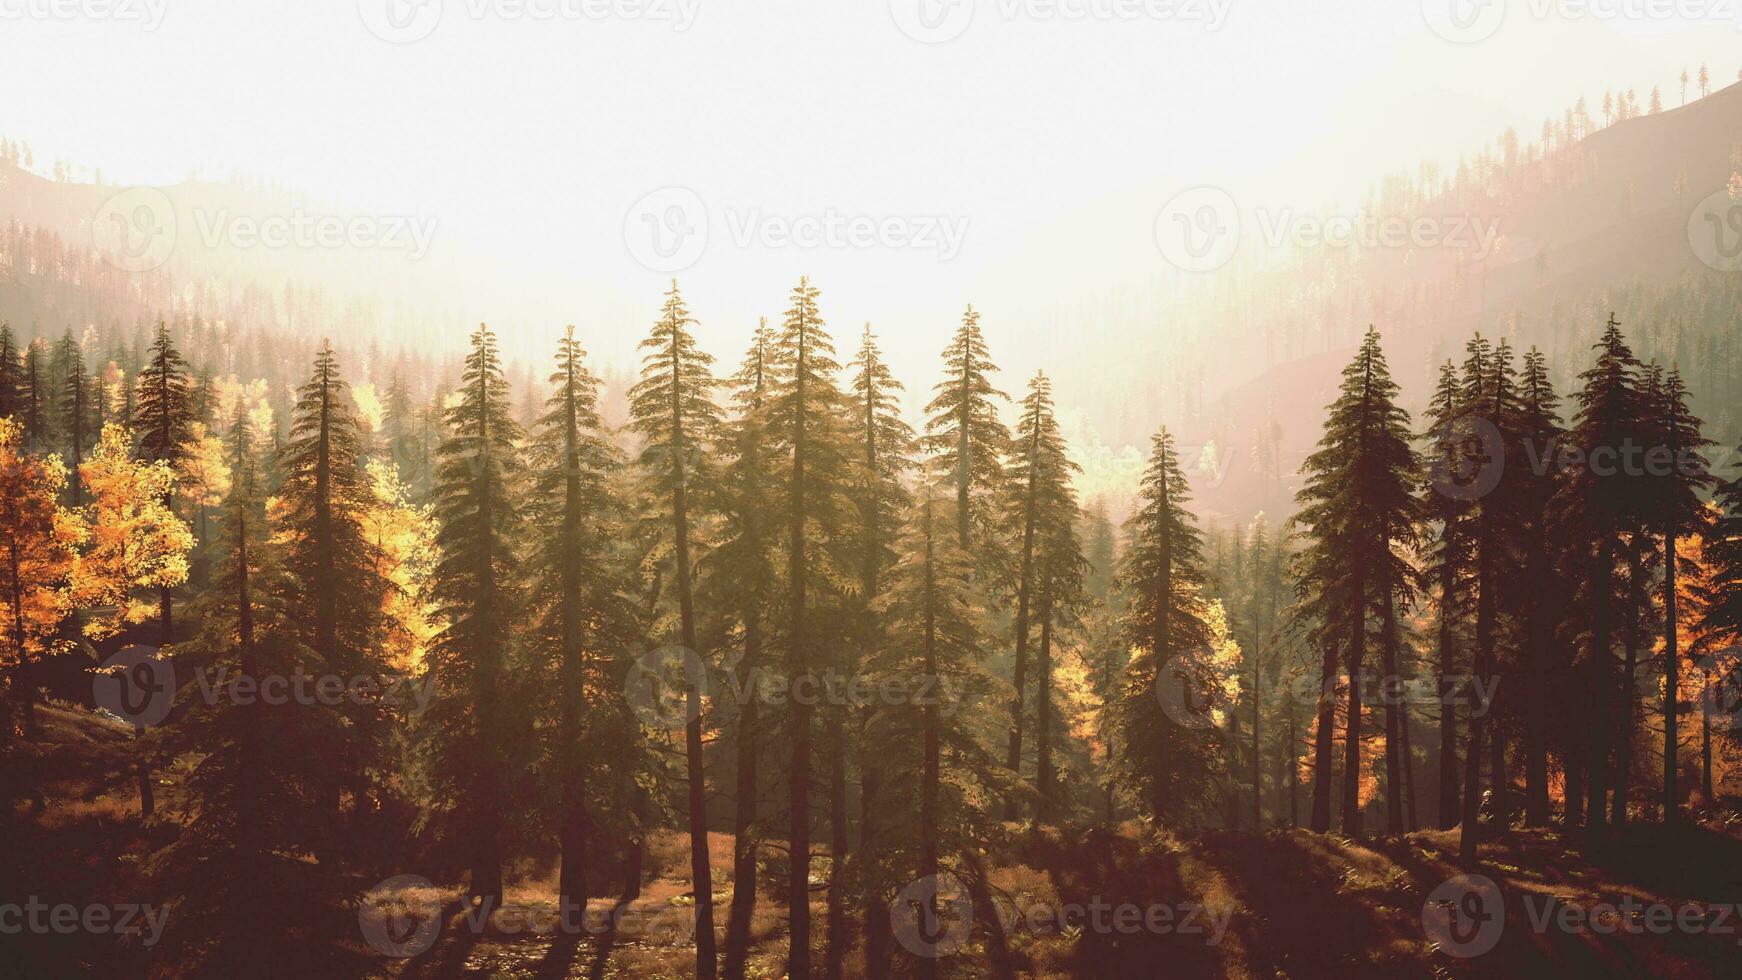 ljus vintergröna skog i de bergen under solnedgång foto